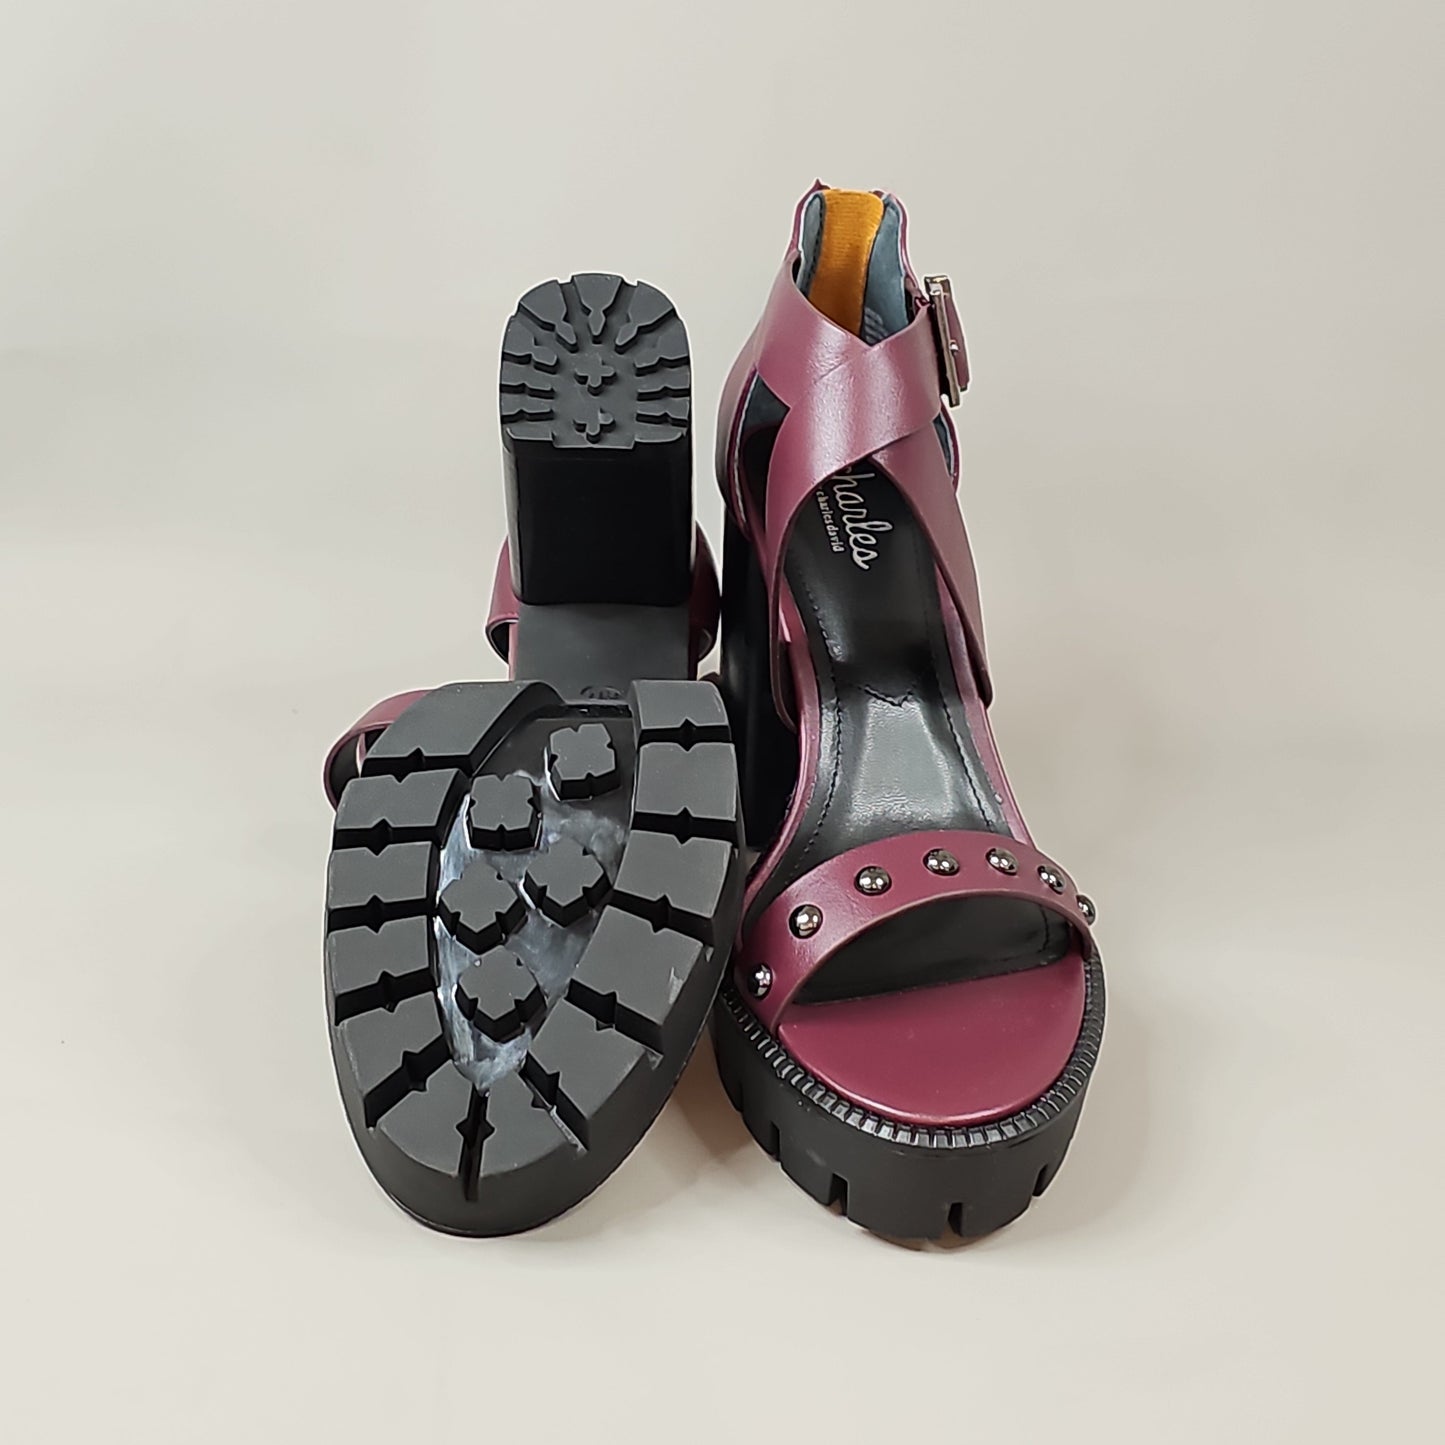 CHARLES BY CHARLES DAVID Women's Vanden Studded Sandal Shoe Sz 7M Burgundy (New)